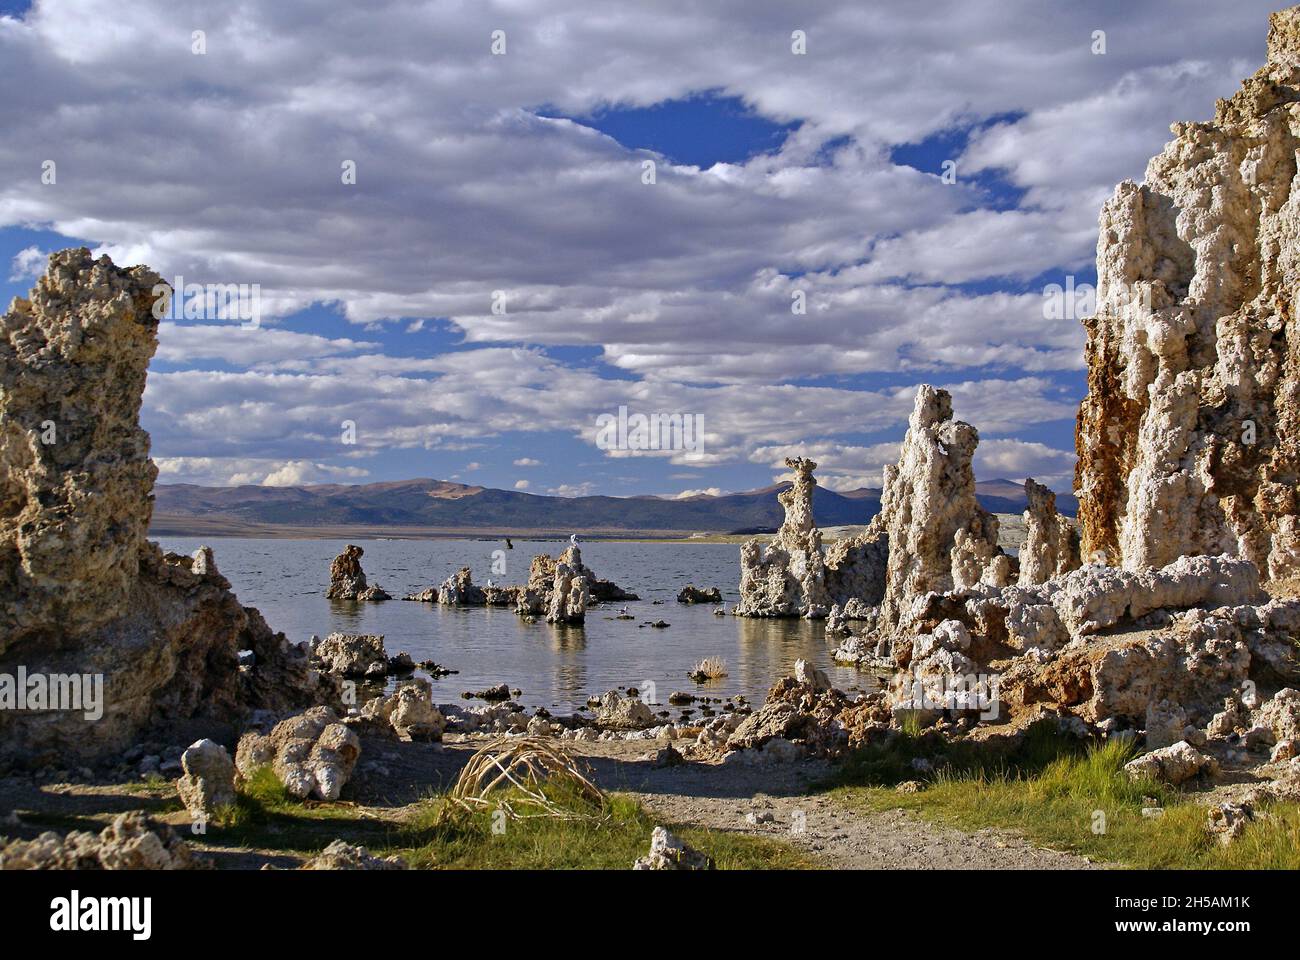 California, USA: Tufa formations at South Tufa, at Mono Lake near Lee Vining. Stock Photo